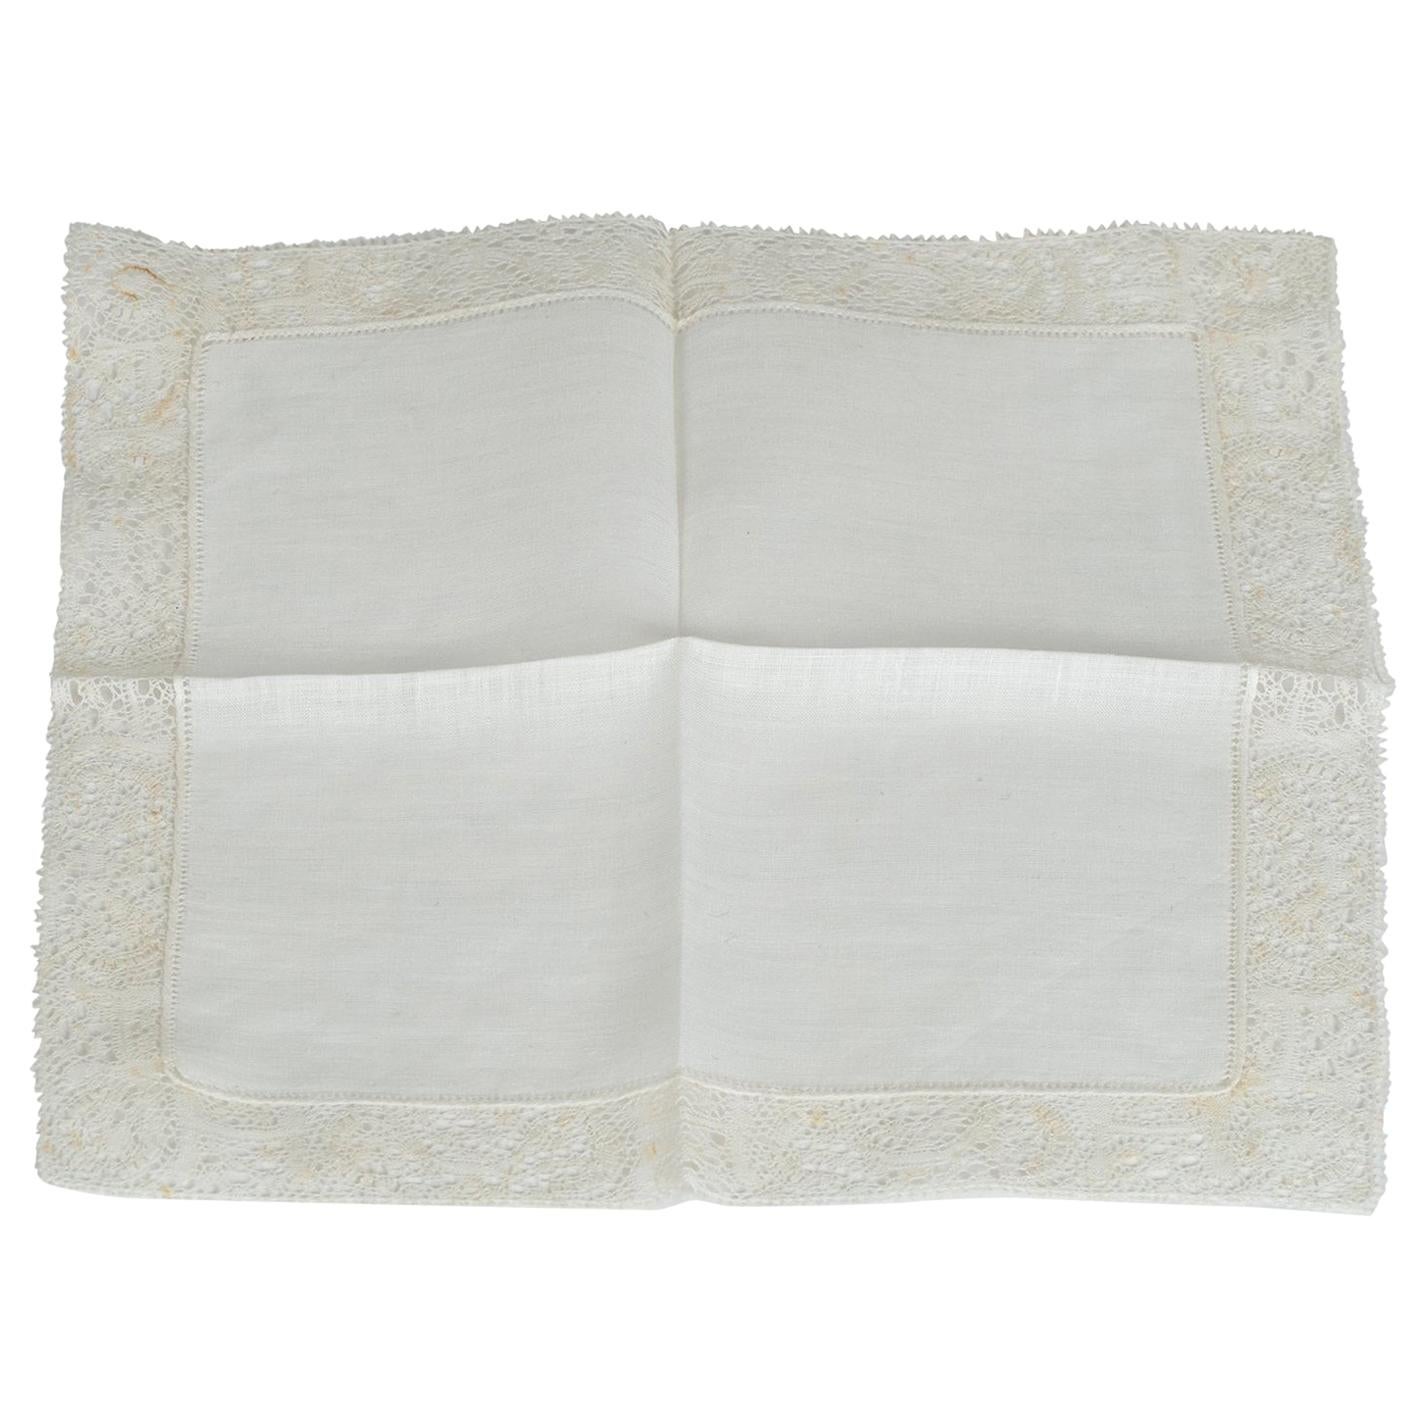 New Ivory Belgian Lace and Linen Wedding Handkerchief – Original Package, 1950s